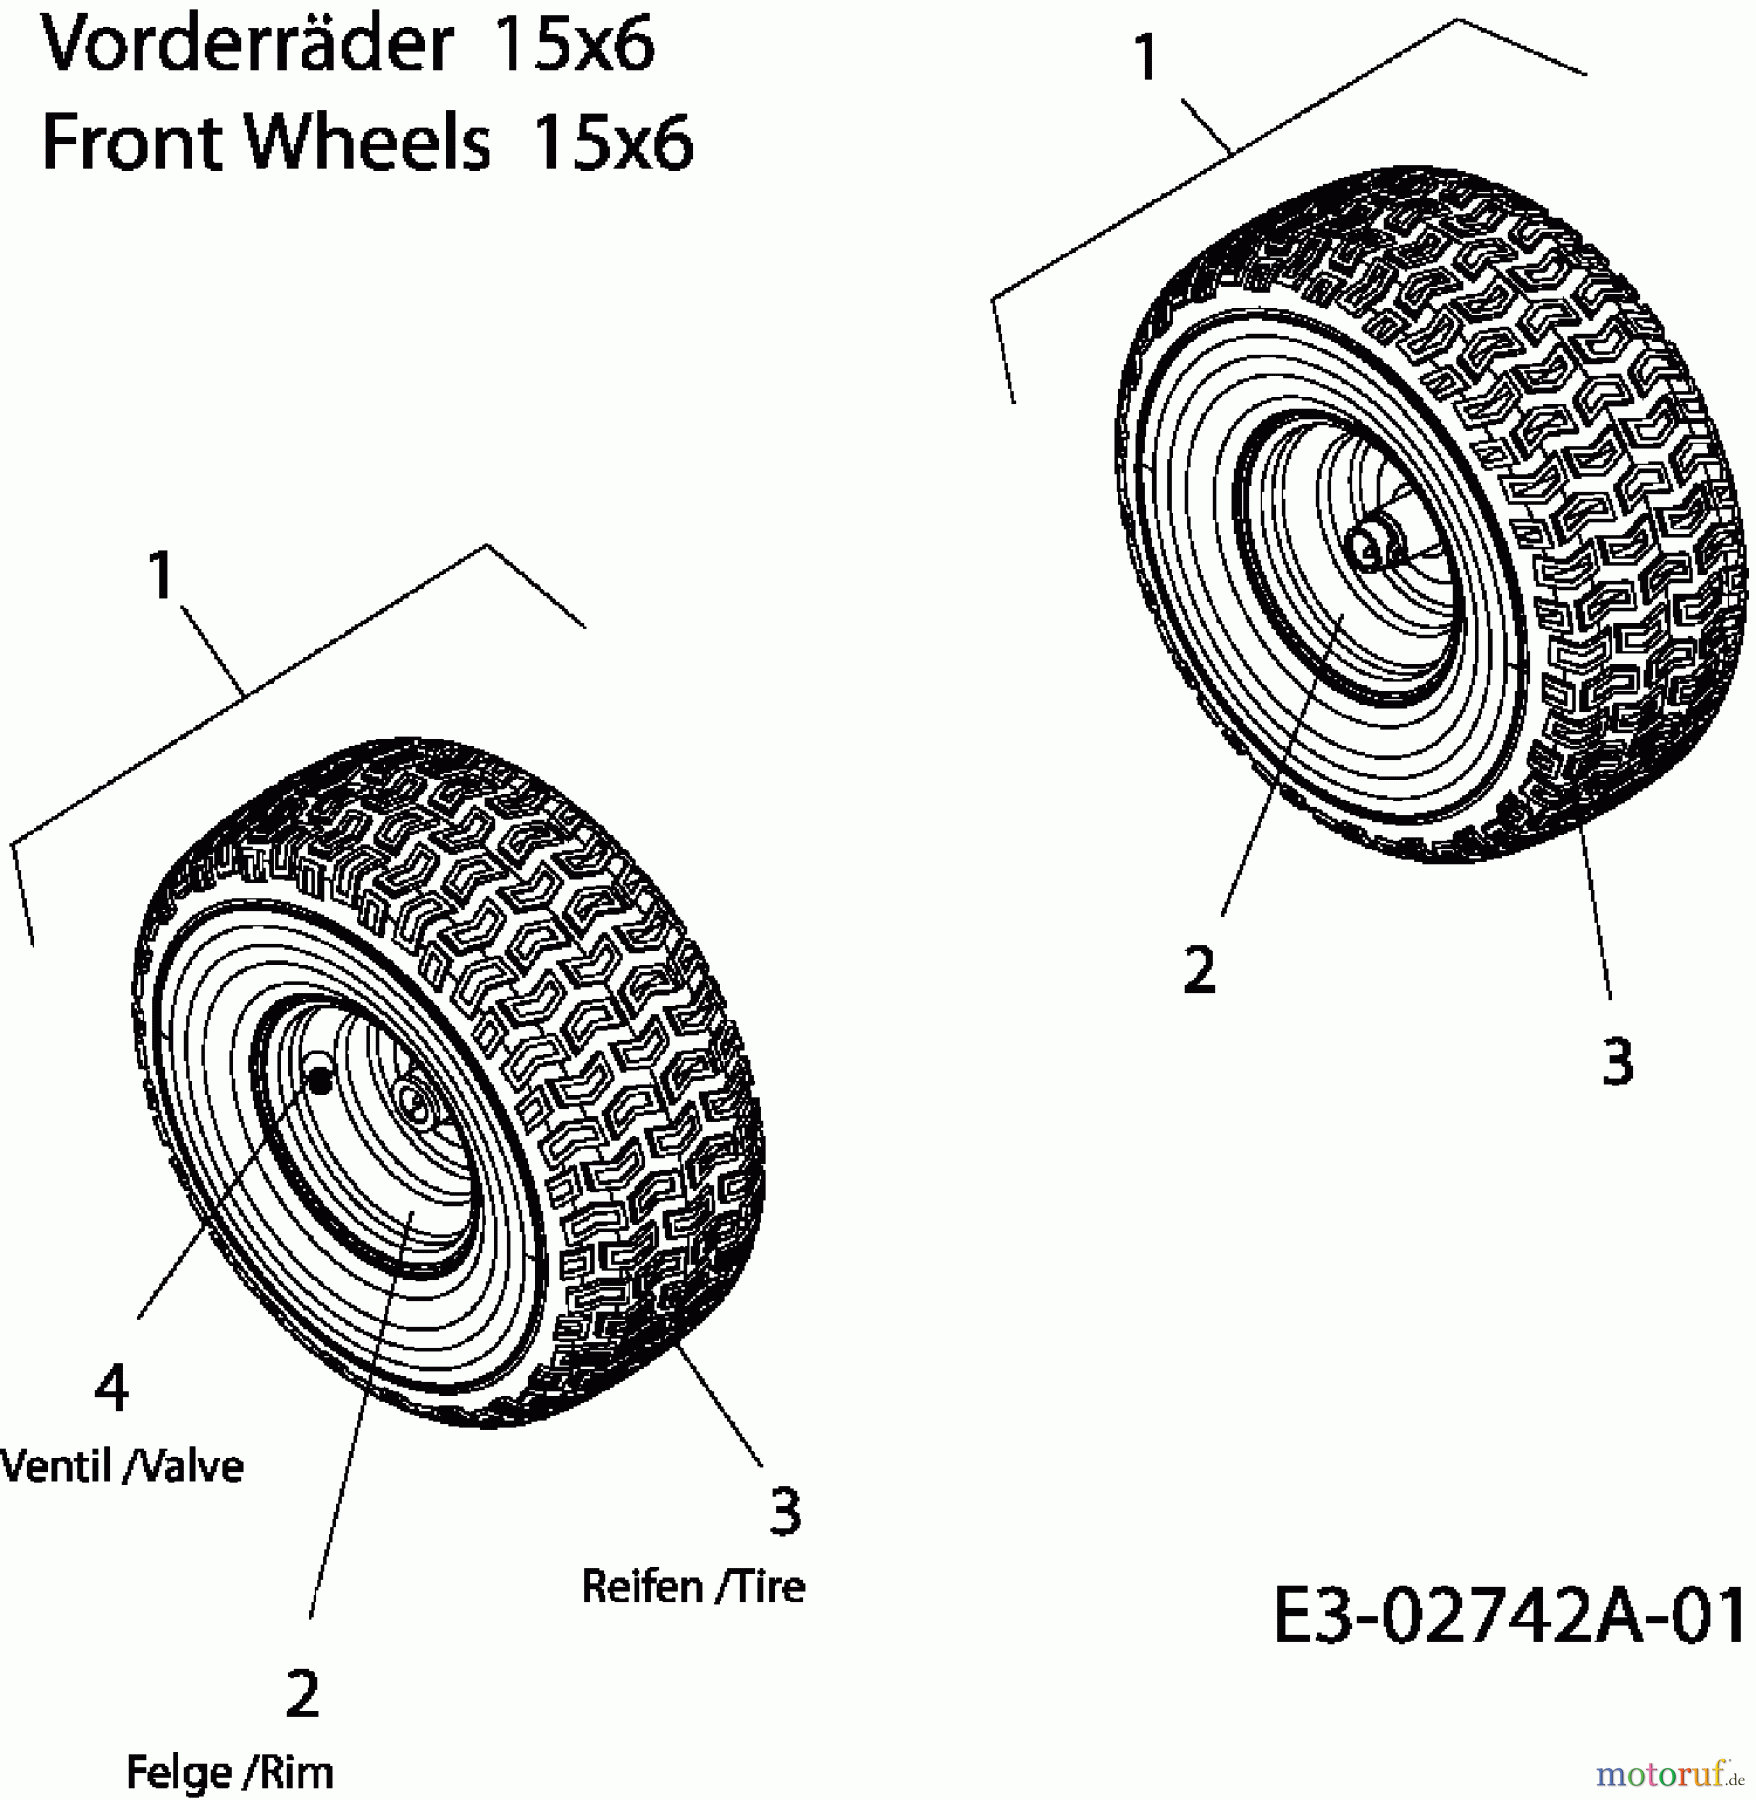  Black-Line Lawn tractors RS 22/107 13A4761G683  (2006) Front wheels